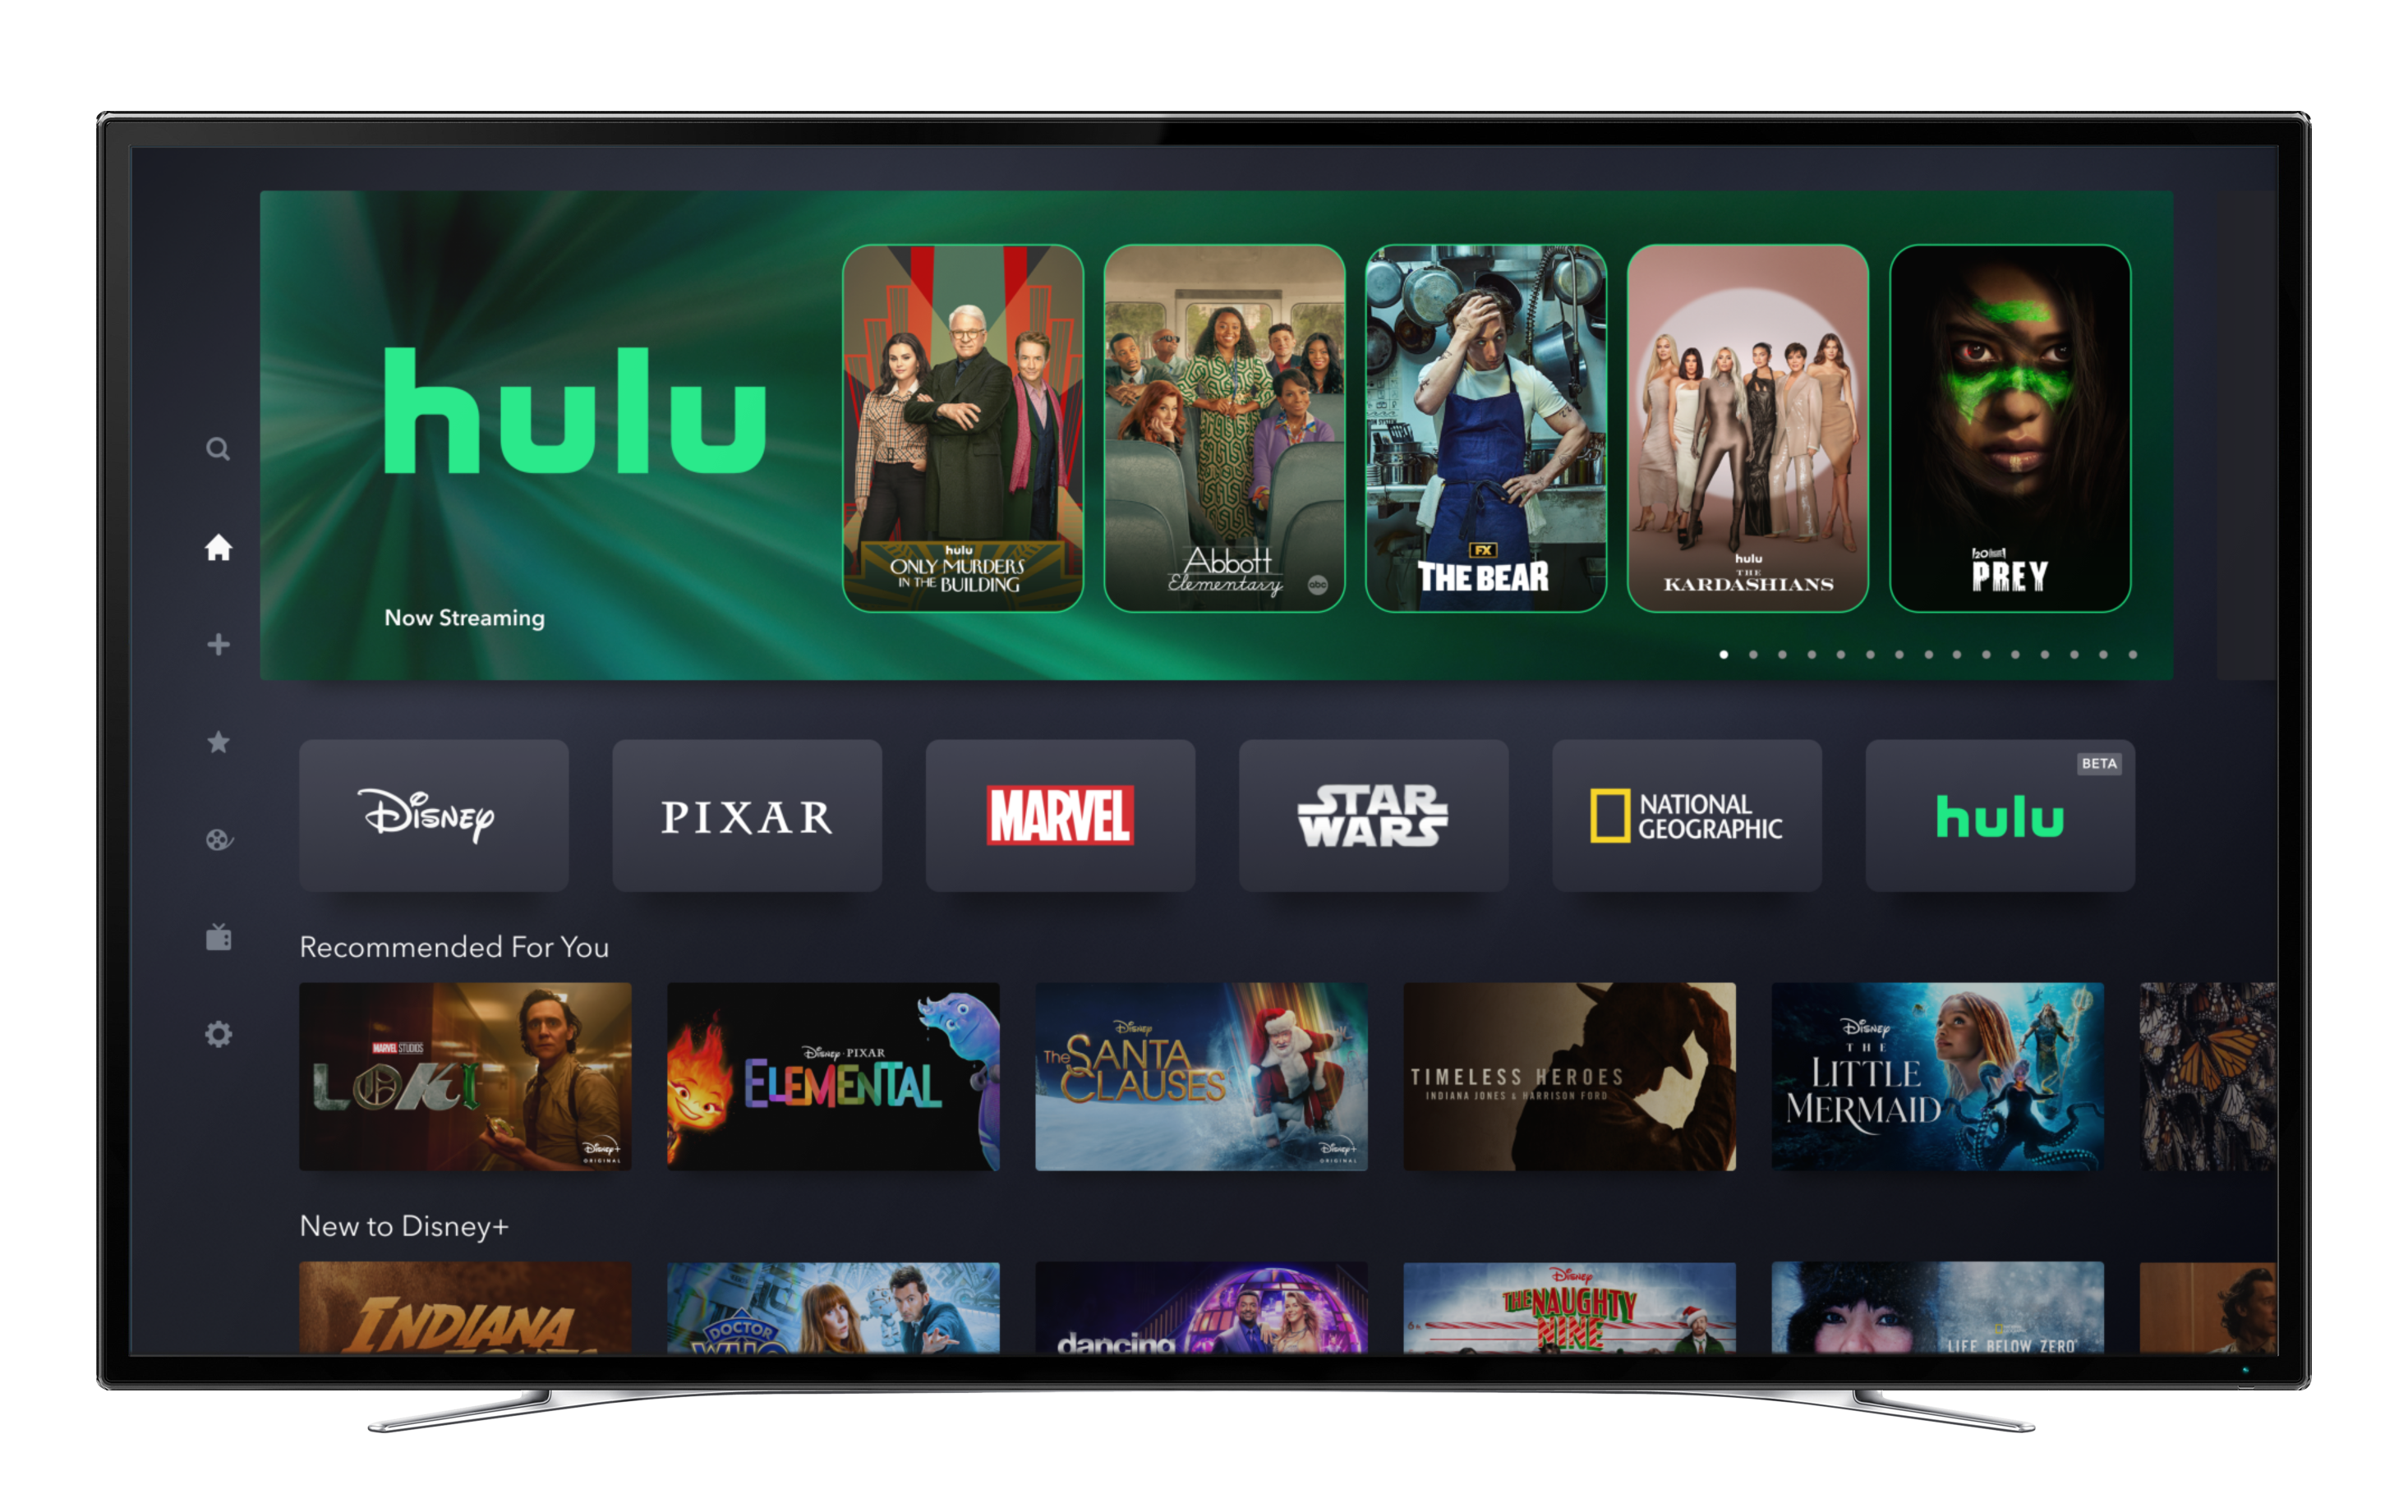 Hulu on Disney+ Beta Launch: What You Need to Know - The Walt Disney Company